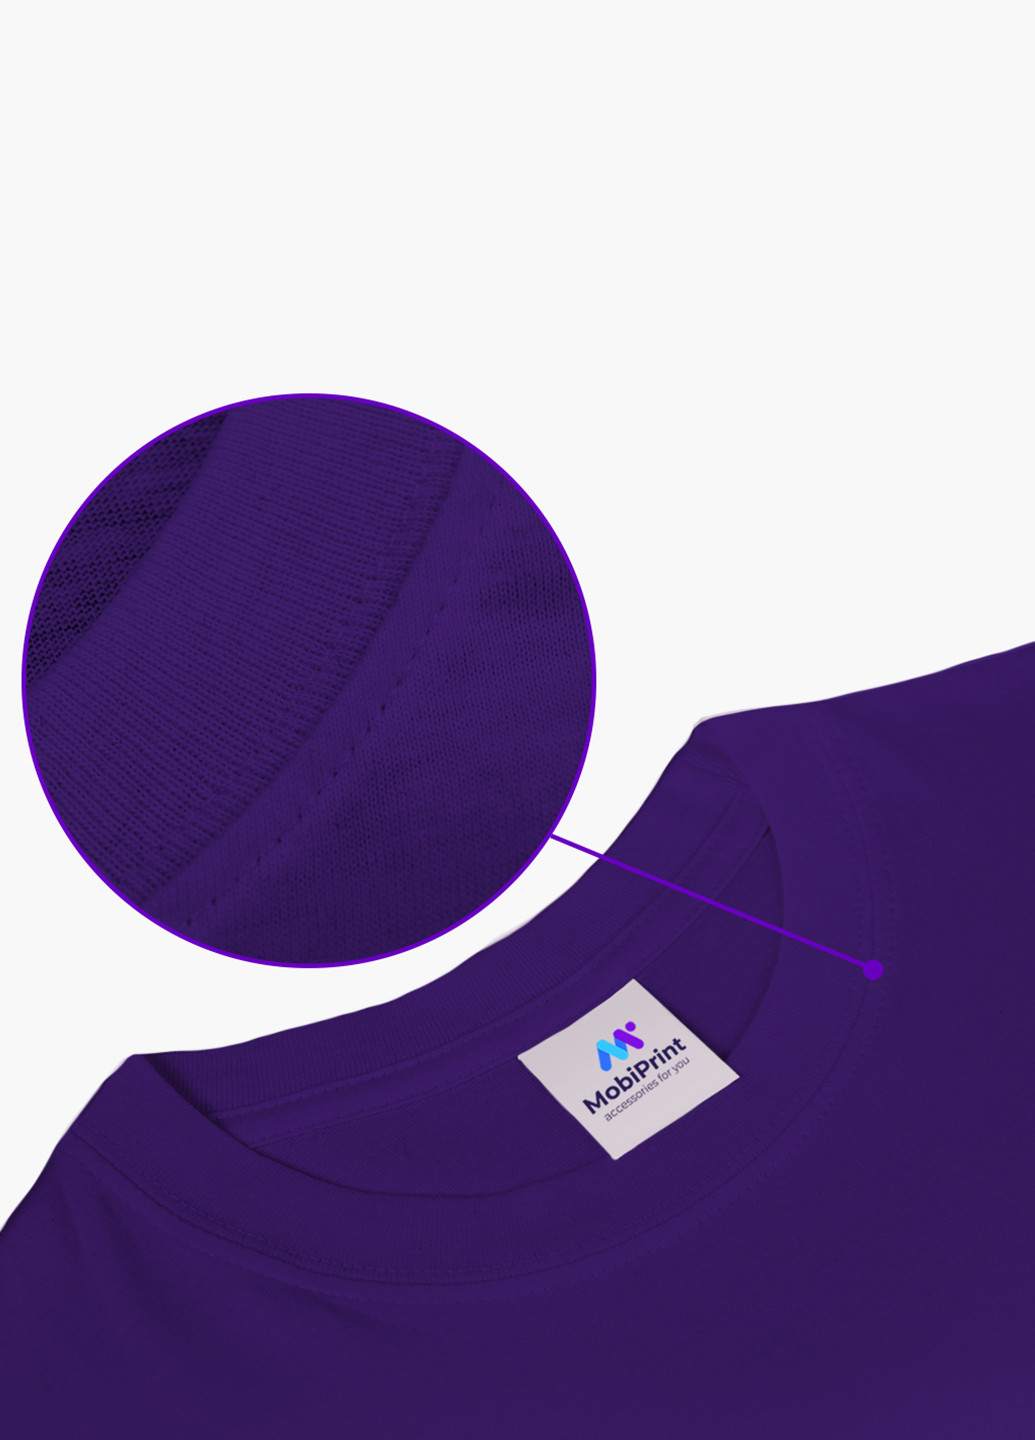 Фіолетова демісезонна футболка дитяча пубг пабг (pubg) (9224-1184) MobiPrint